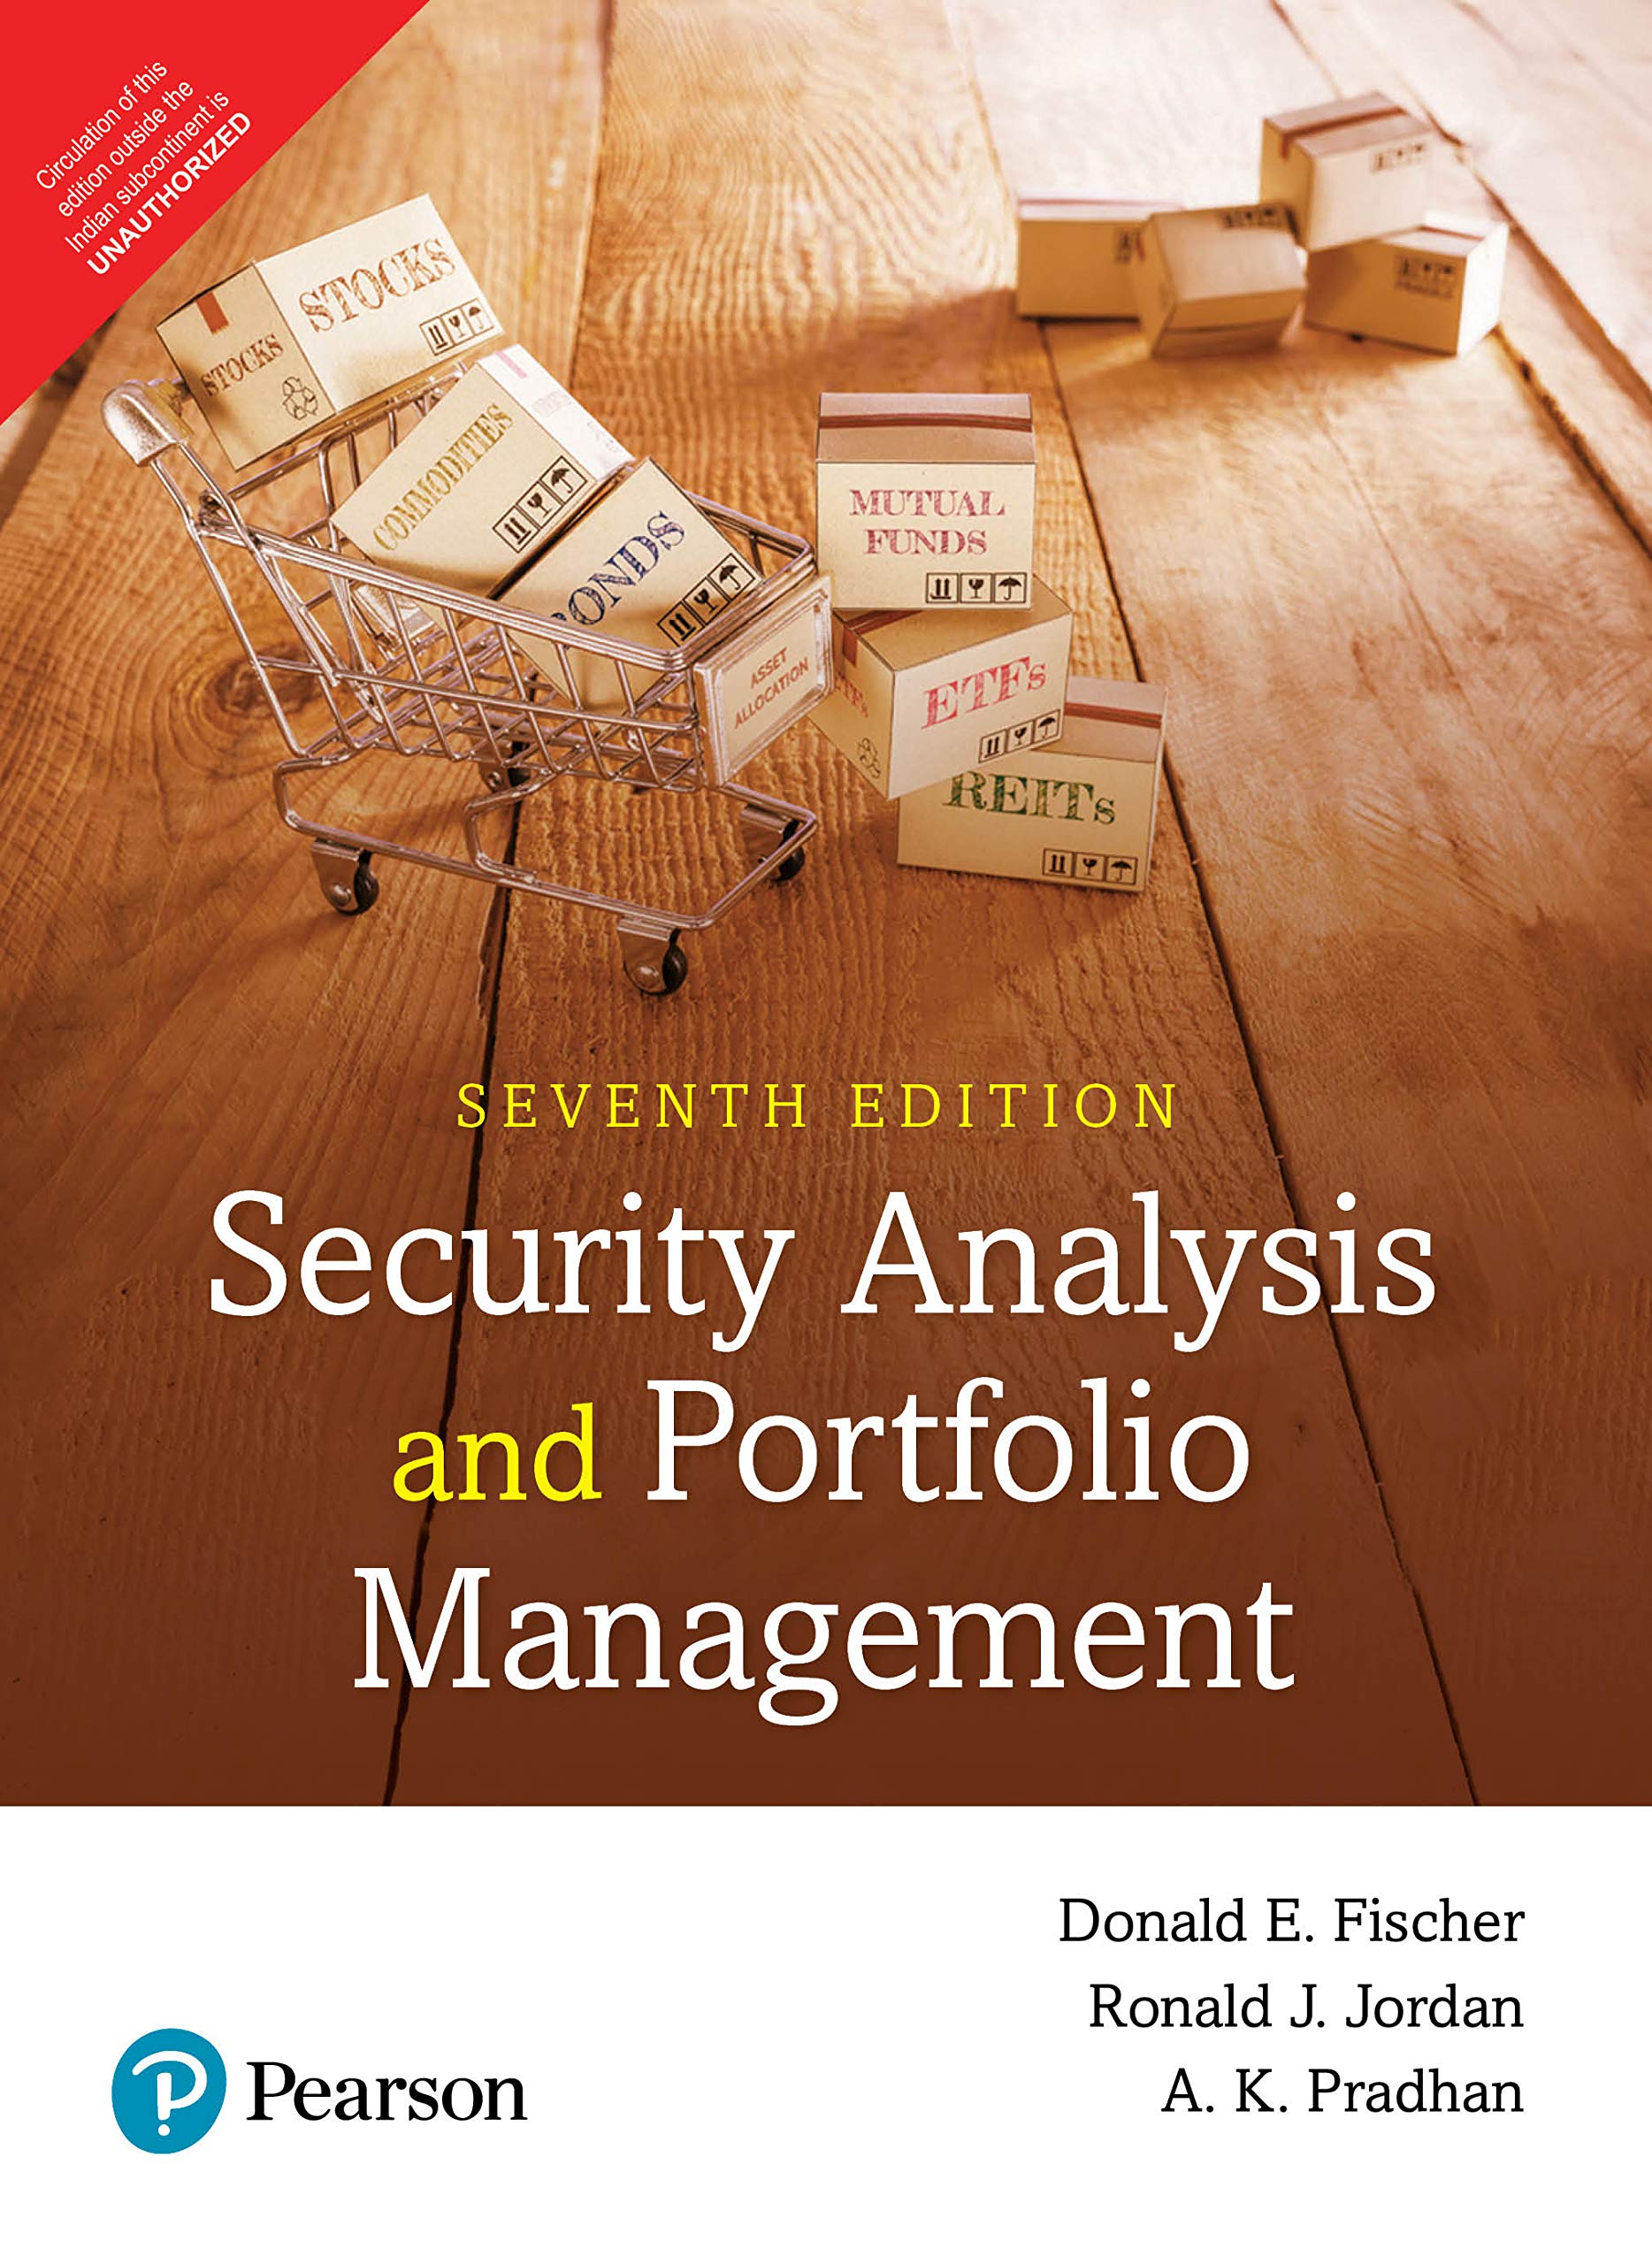 Pearson’s Security Analysis & Portfolio Management